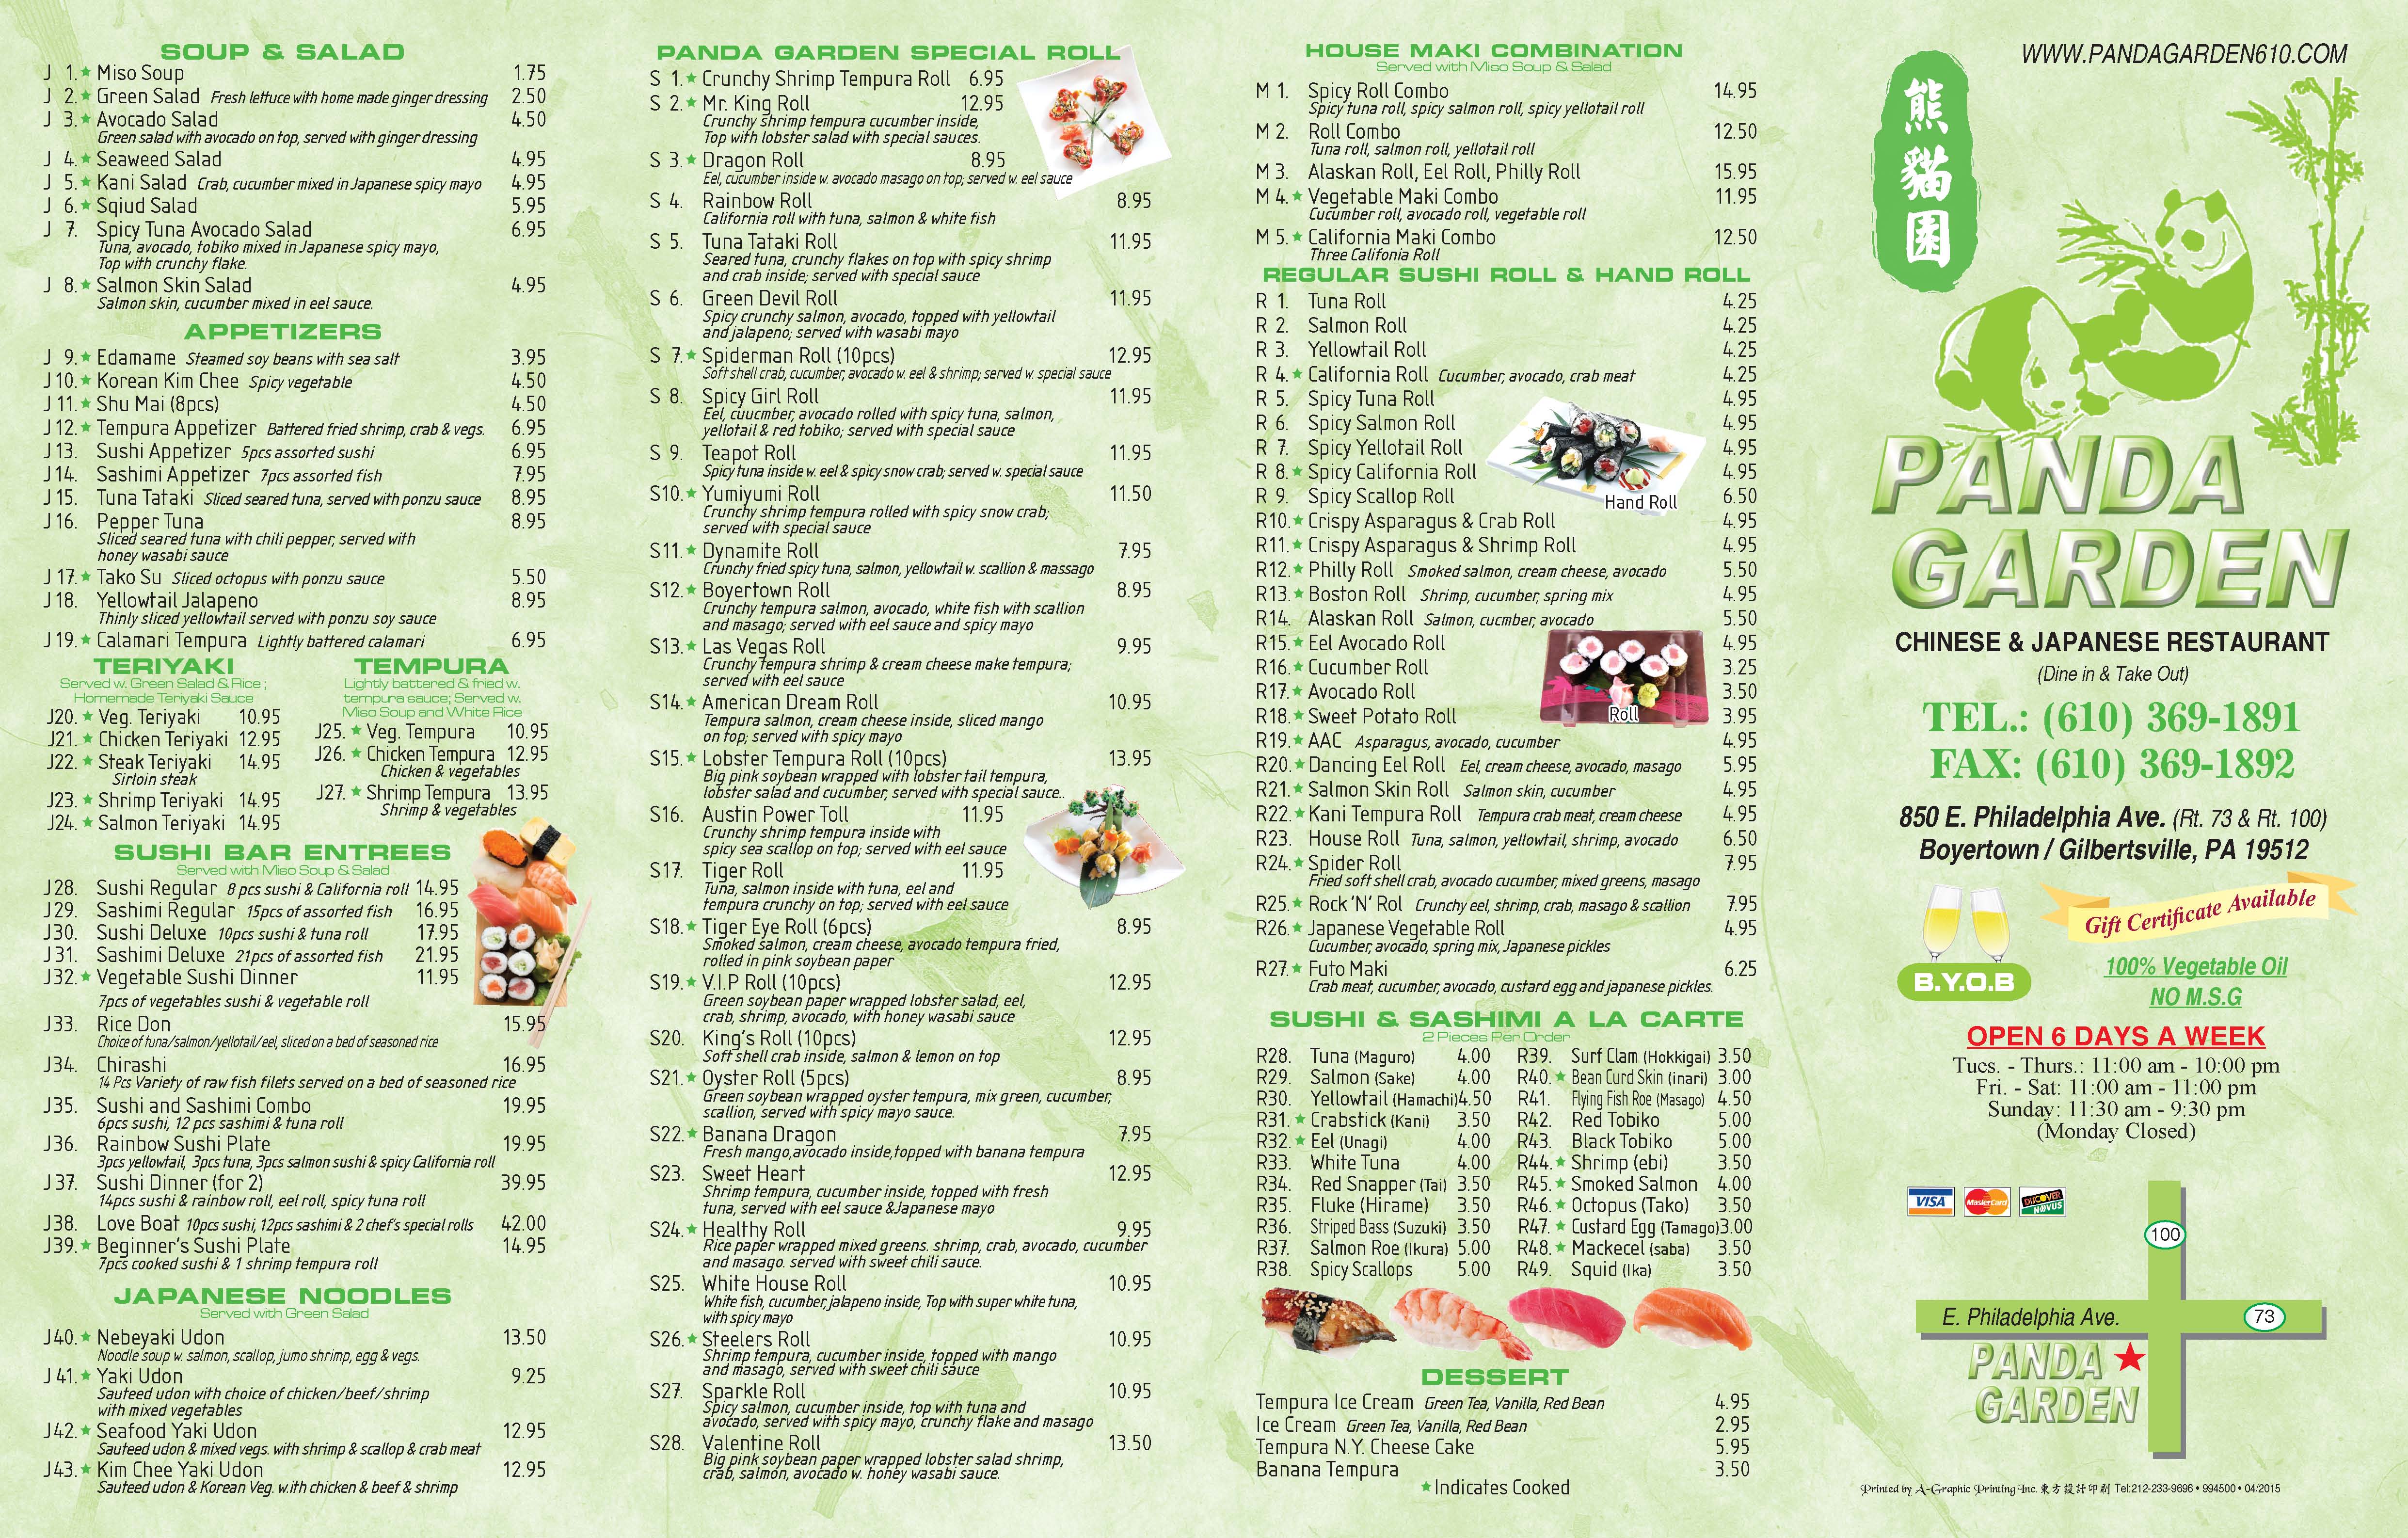 panda pavilion menu